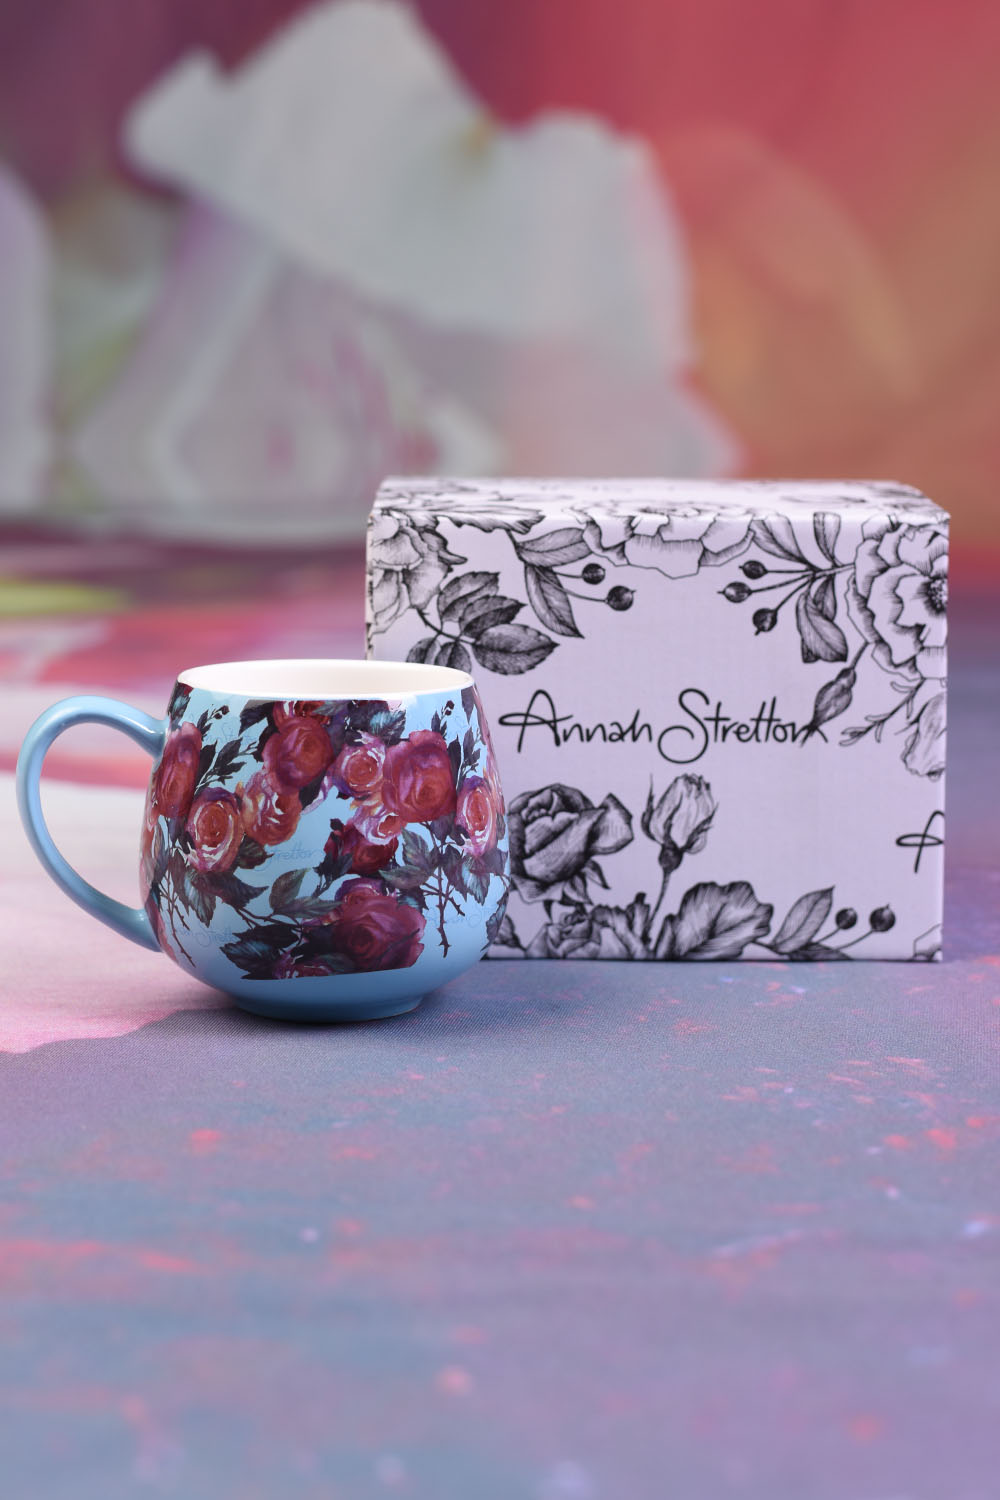 The Annah Stretton coffee mug in sky floral